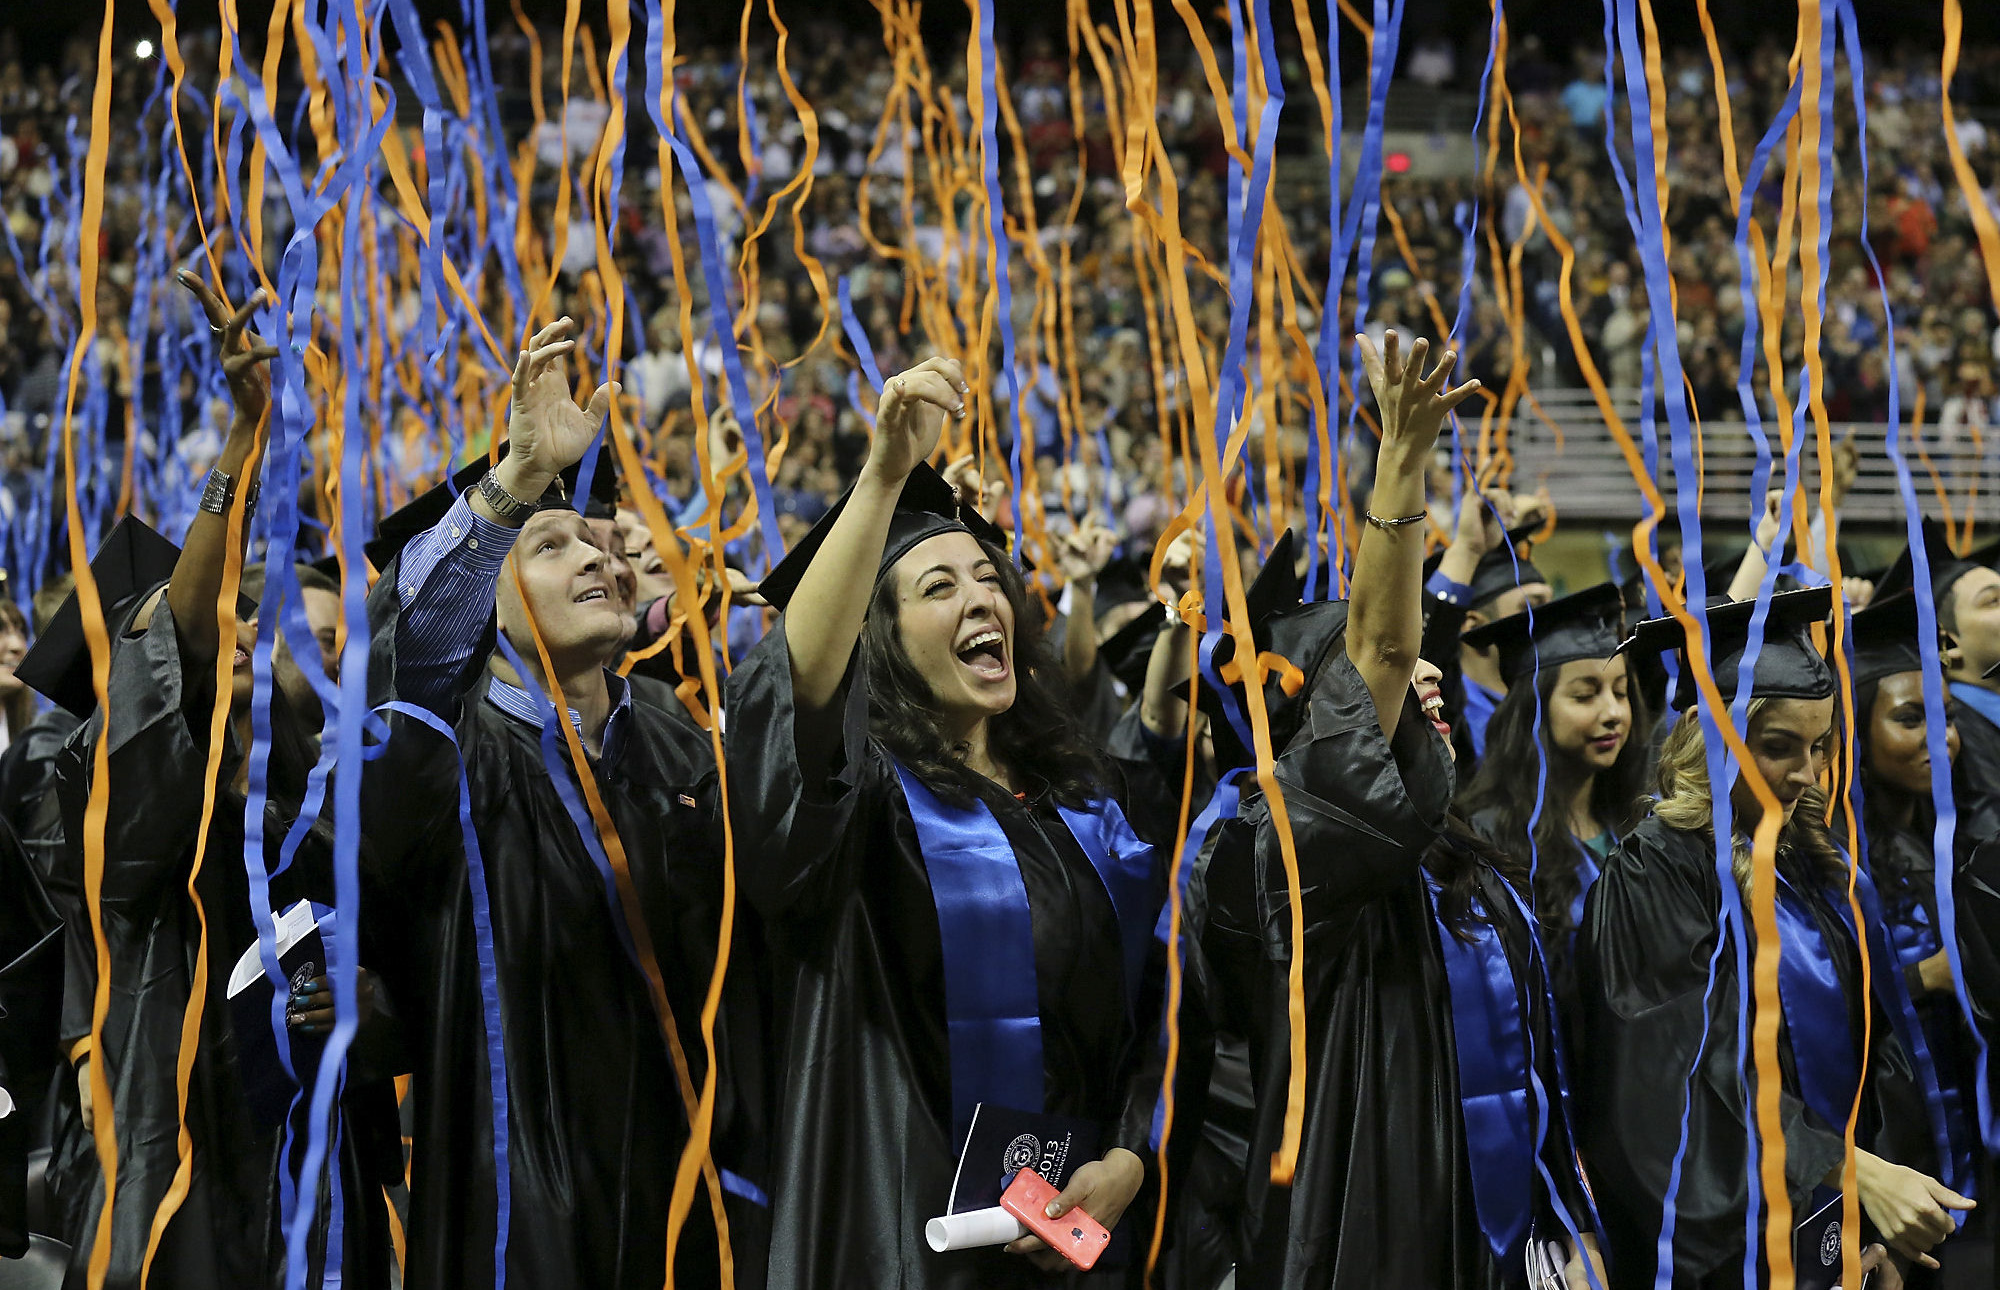 UTSA's December grads all smiles at commencement - San Antonio Express-News